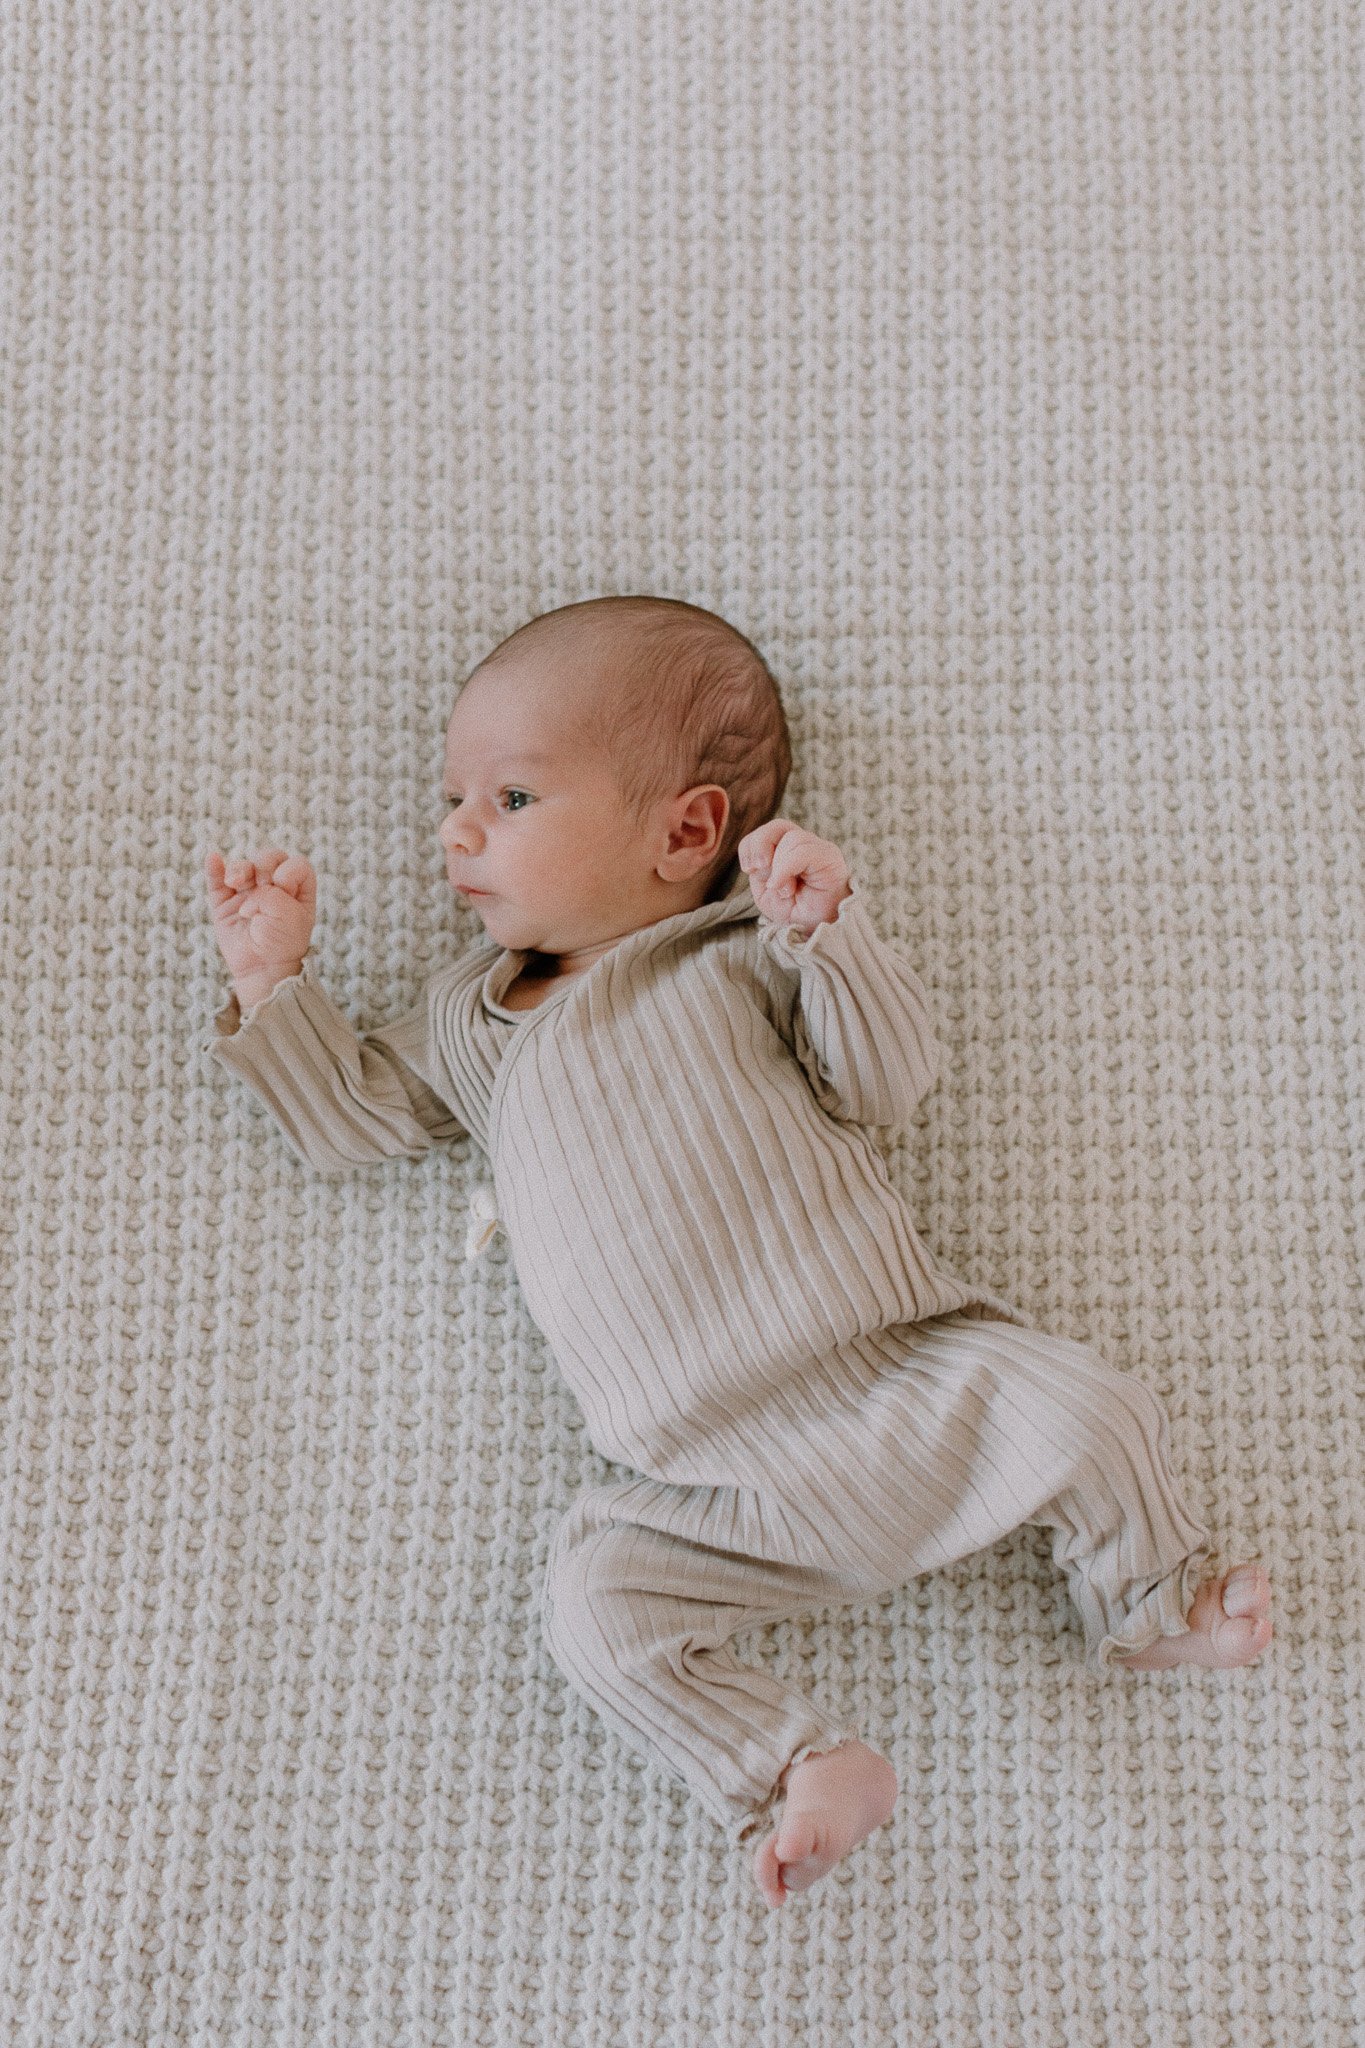  Tunbridge Wells nnewborn baby photography 